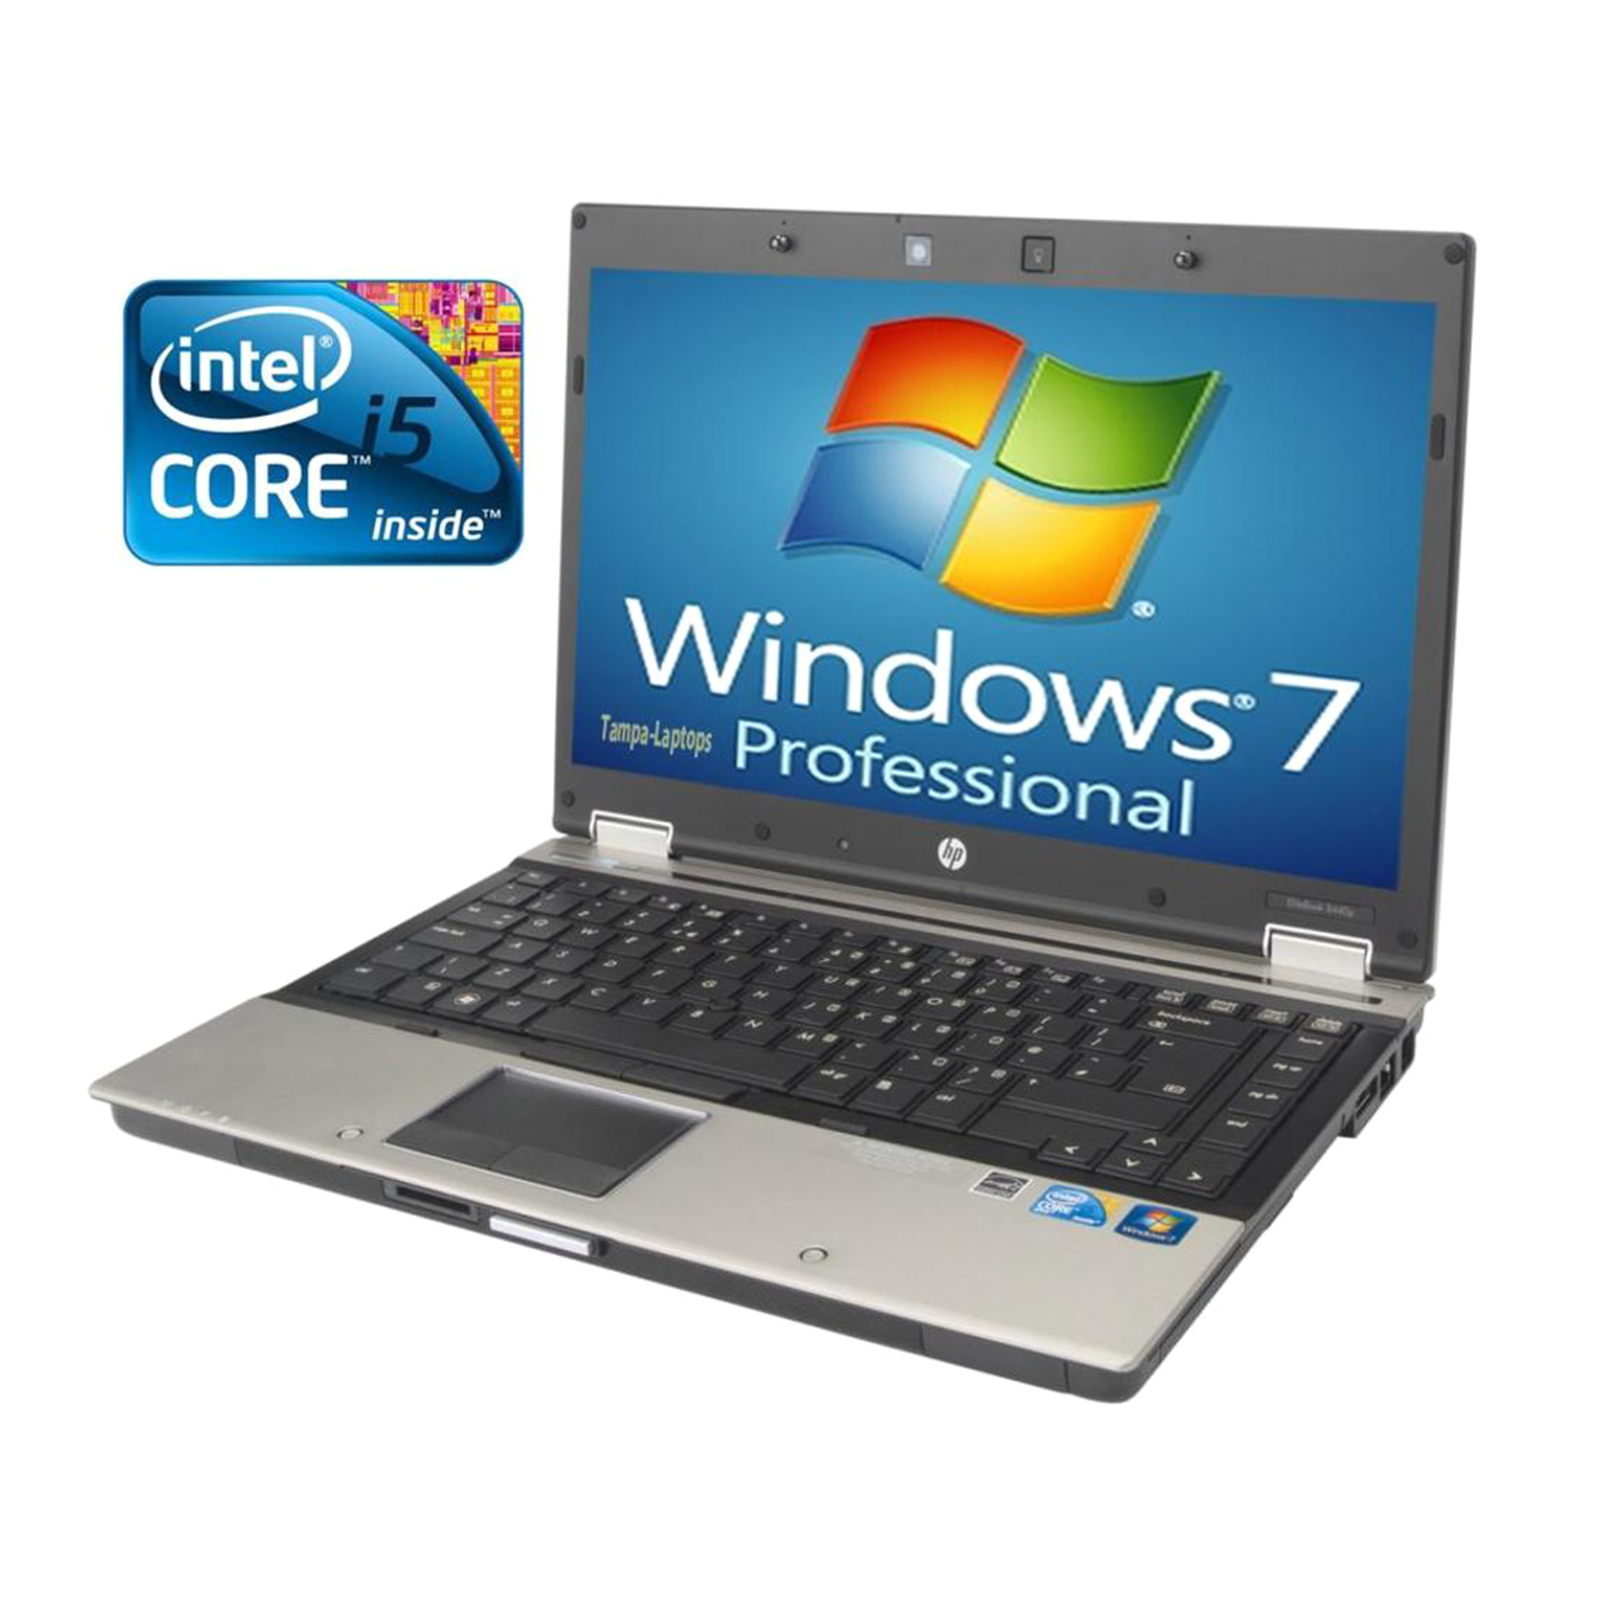 HP 8440p-24-500-webcam-7pro64 14.1" Refurbished Elitebook with Intel Core i5-520M 2.4GHz Processor